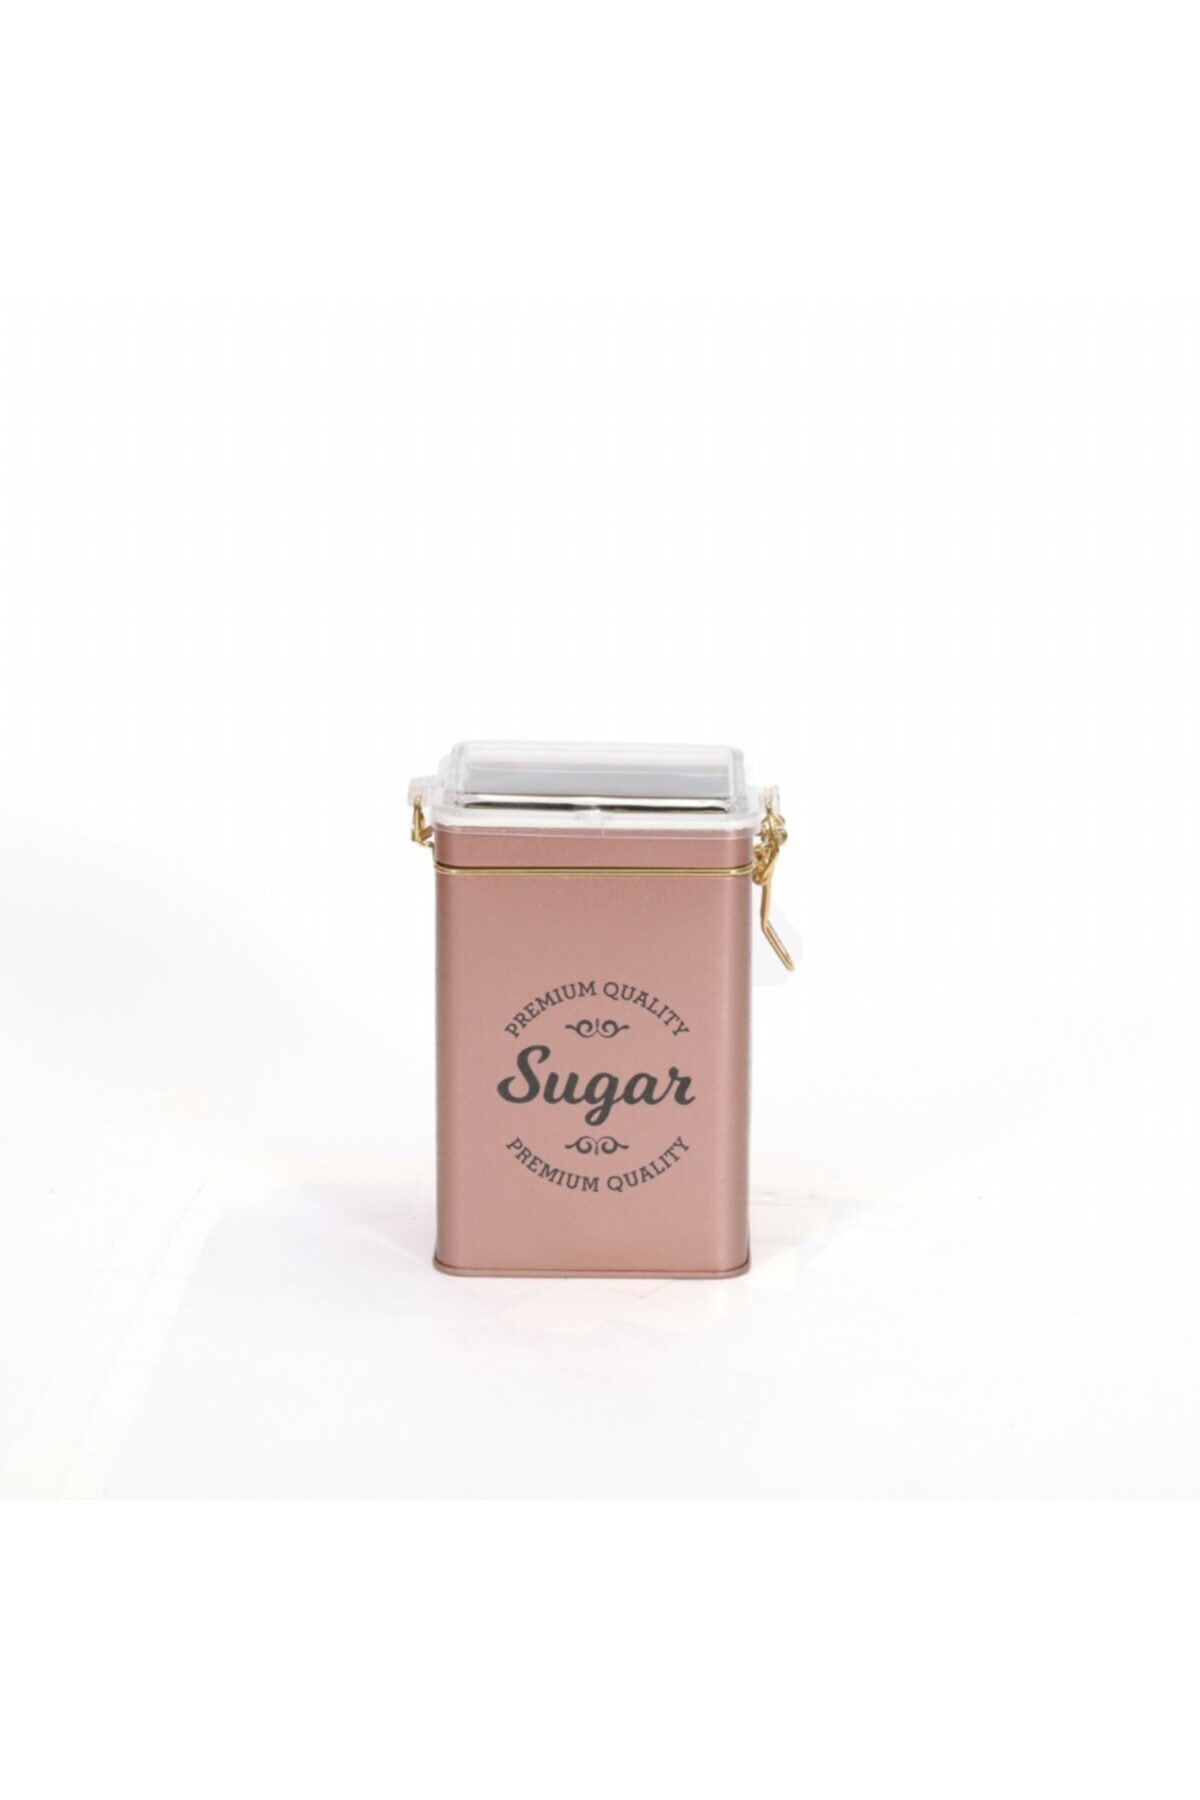 SN_Sugar Rose Desenli Kilitli Kapaklı Dikdörtgen Metal Kutu, 7.5 x 10 x 15 cm, 1 lt